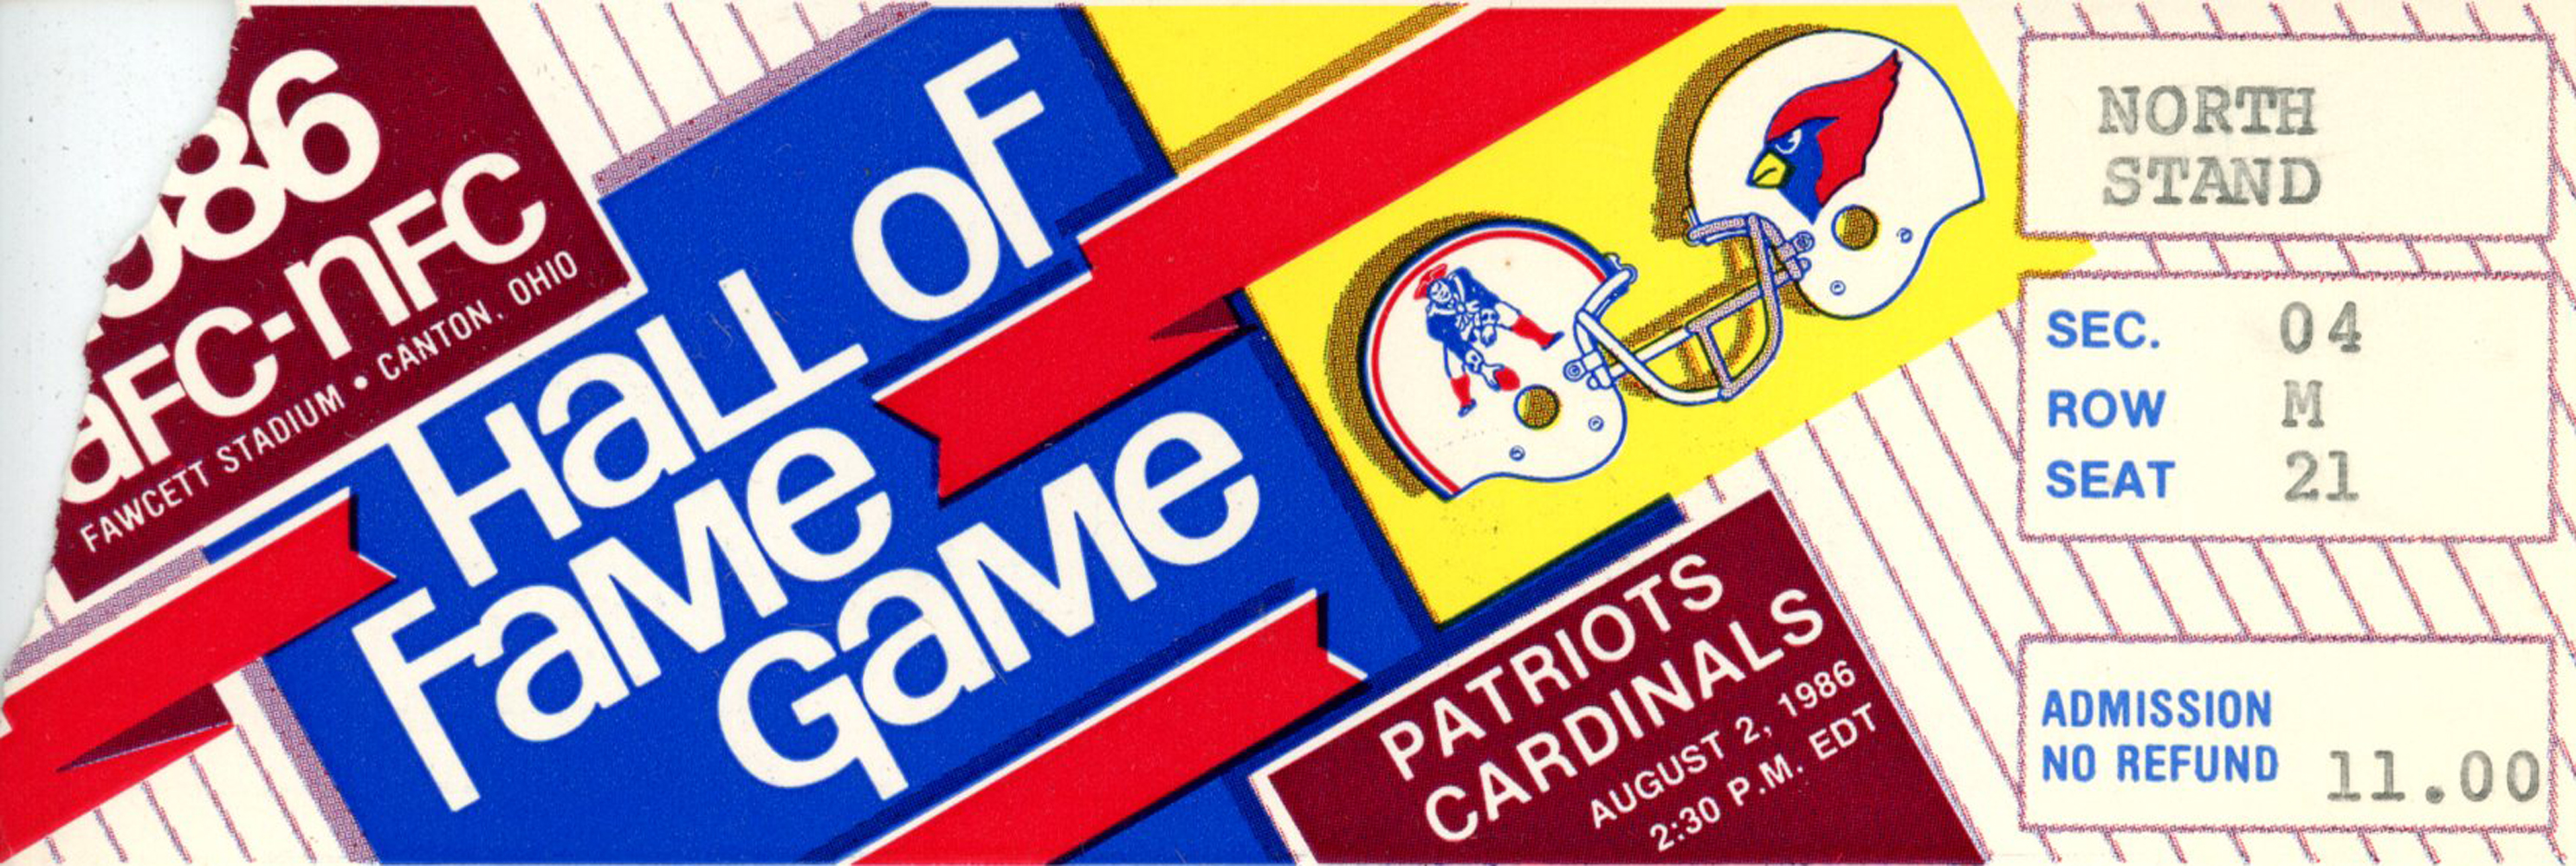 1986 Hall Of Fame Game Ticket New England Patriots vs Phoenix Cardinals